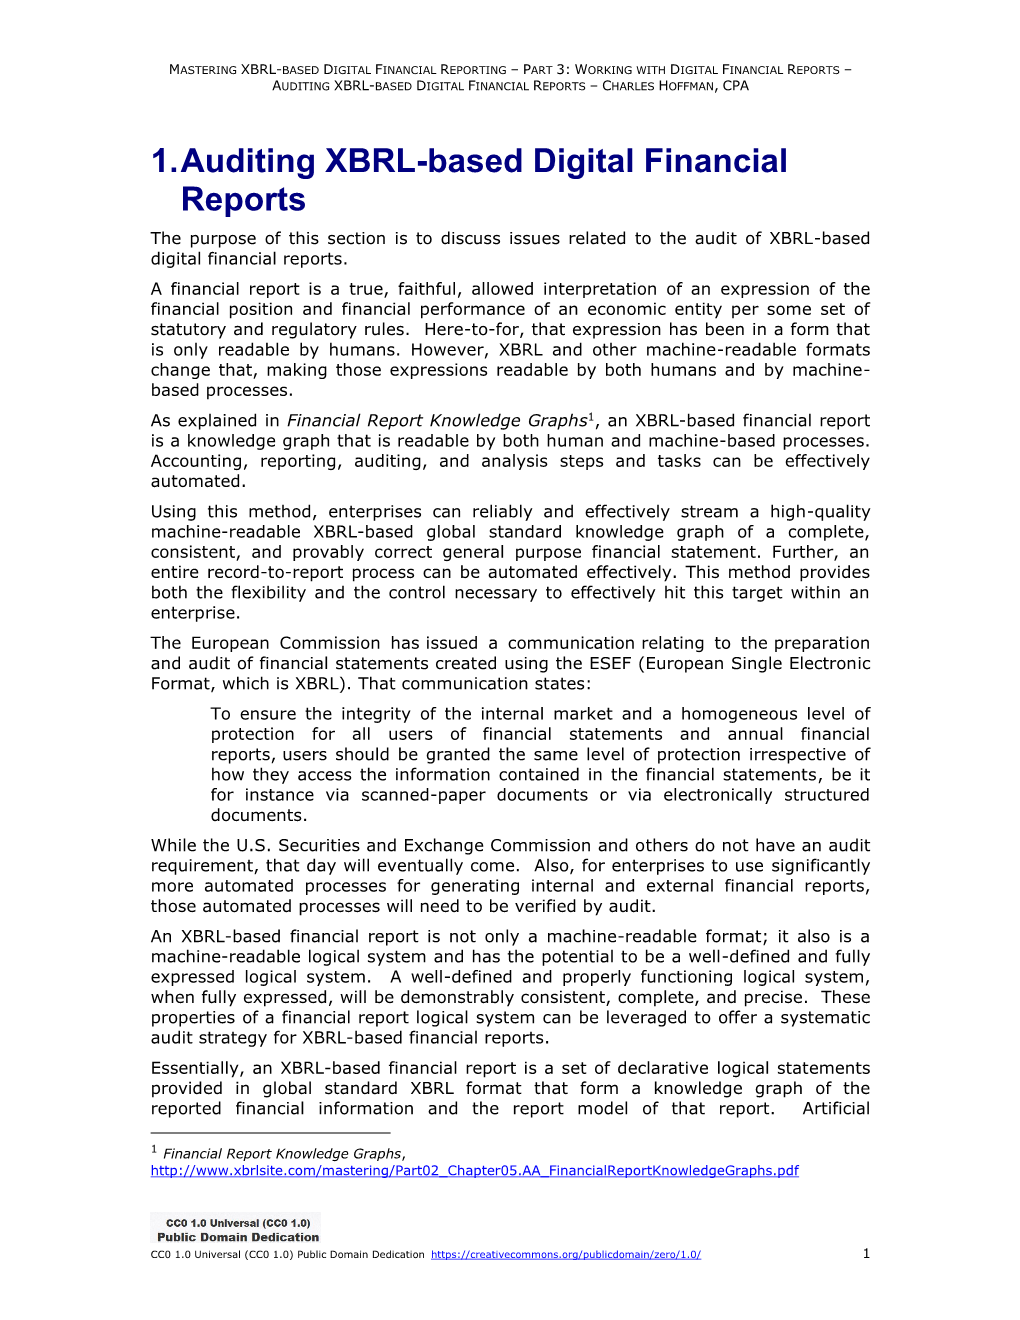 Auditing Xbrl-Based Digital Financial Reports – Charles Hoffman, Cpa